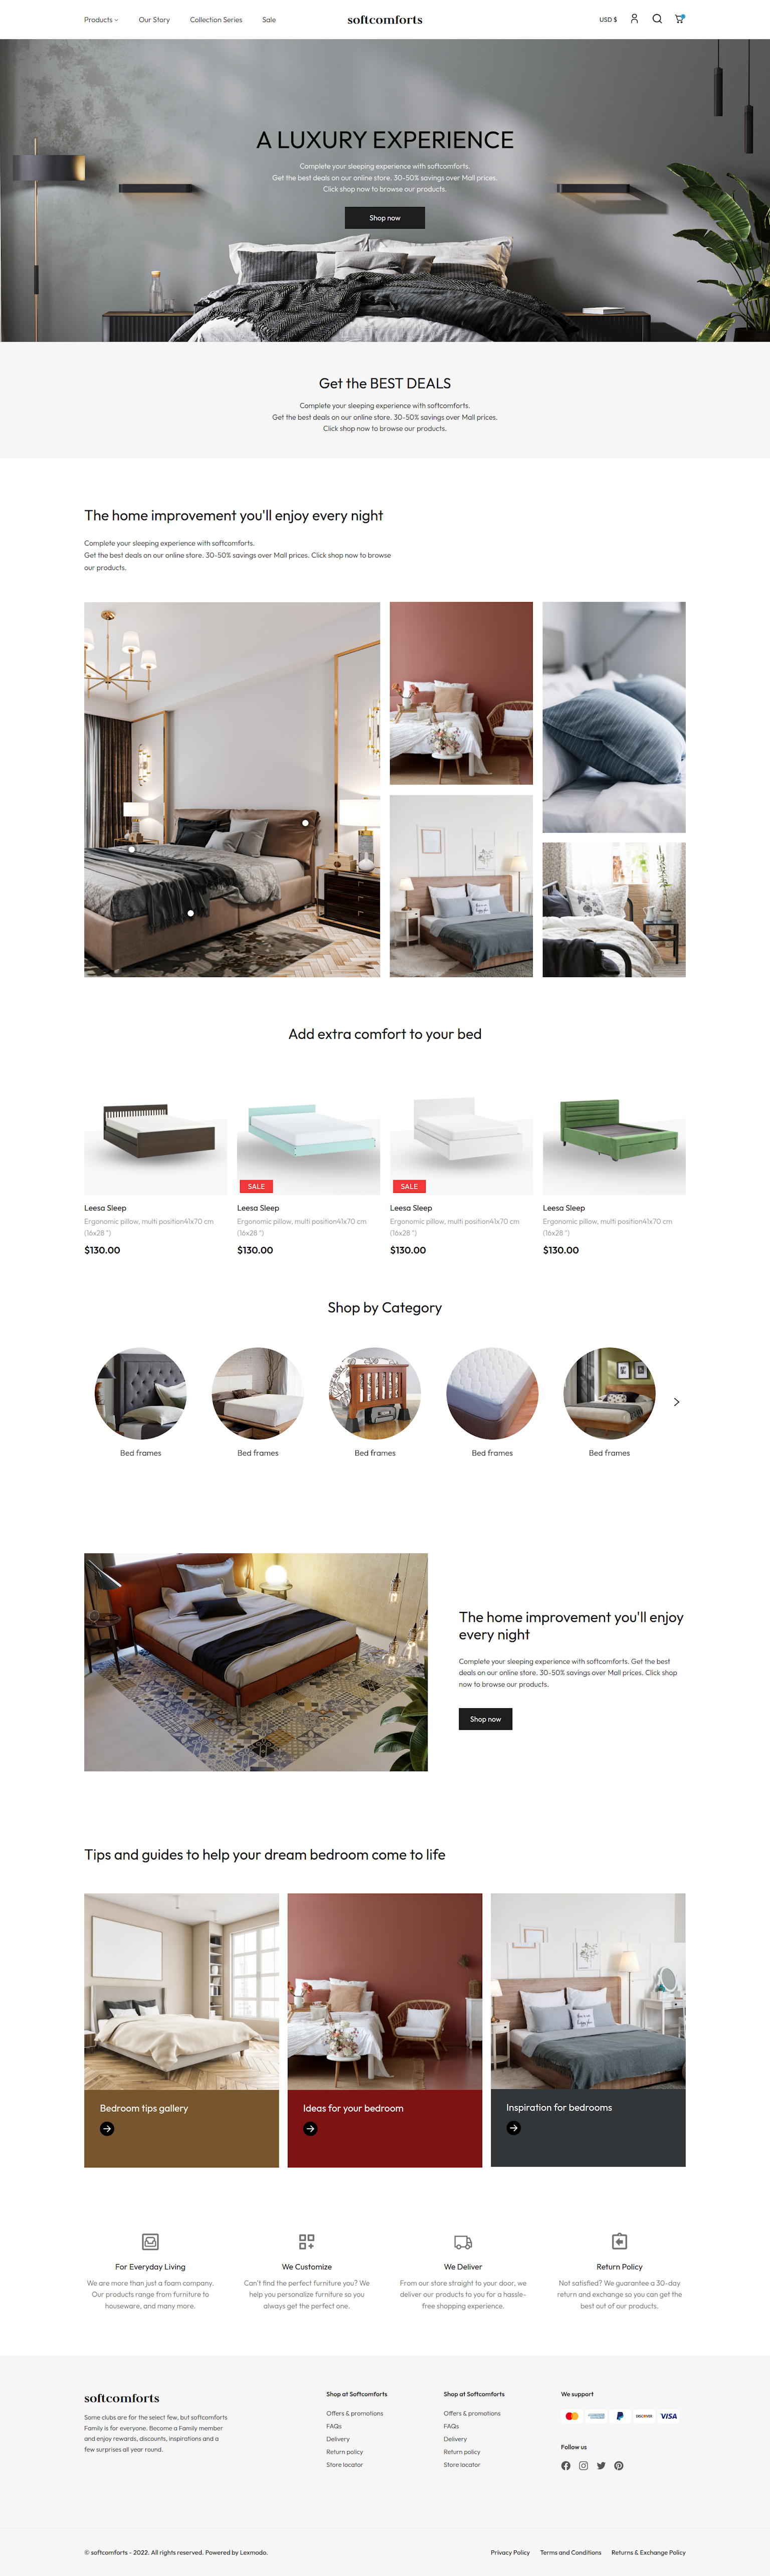 Softcomfort homepage